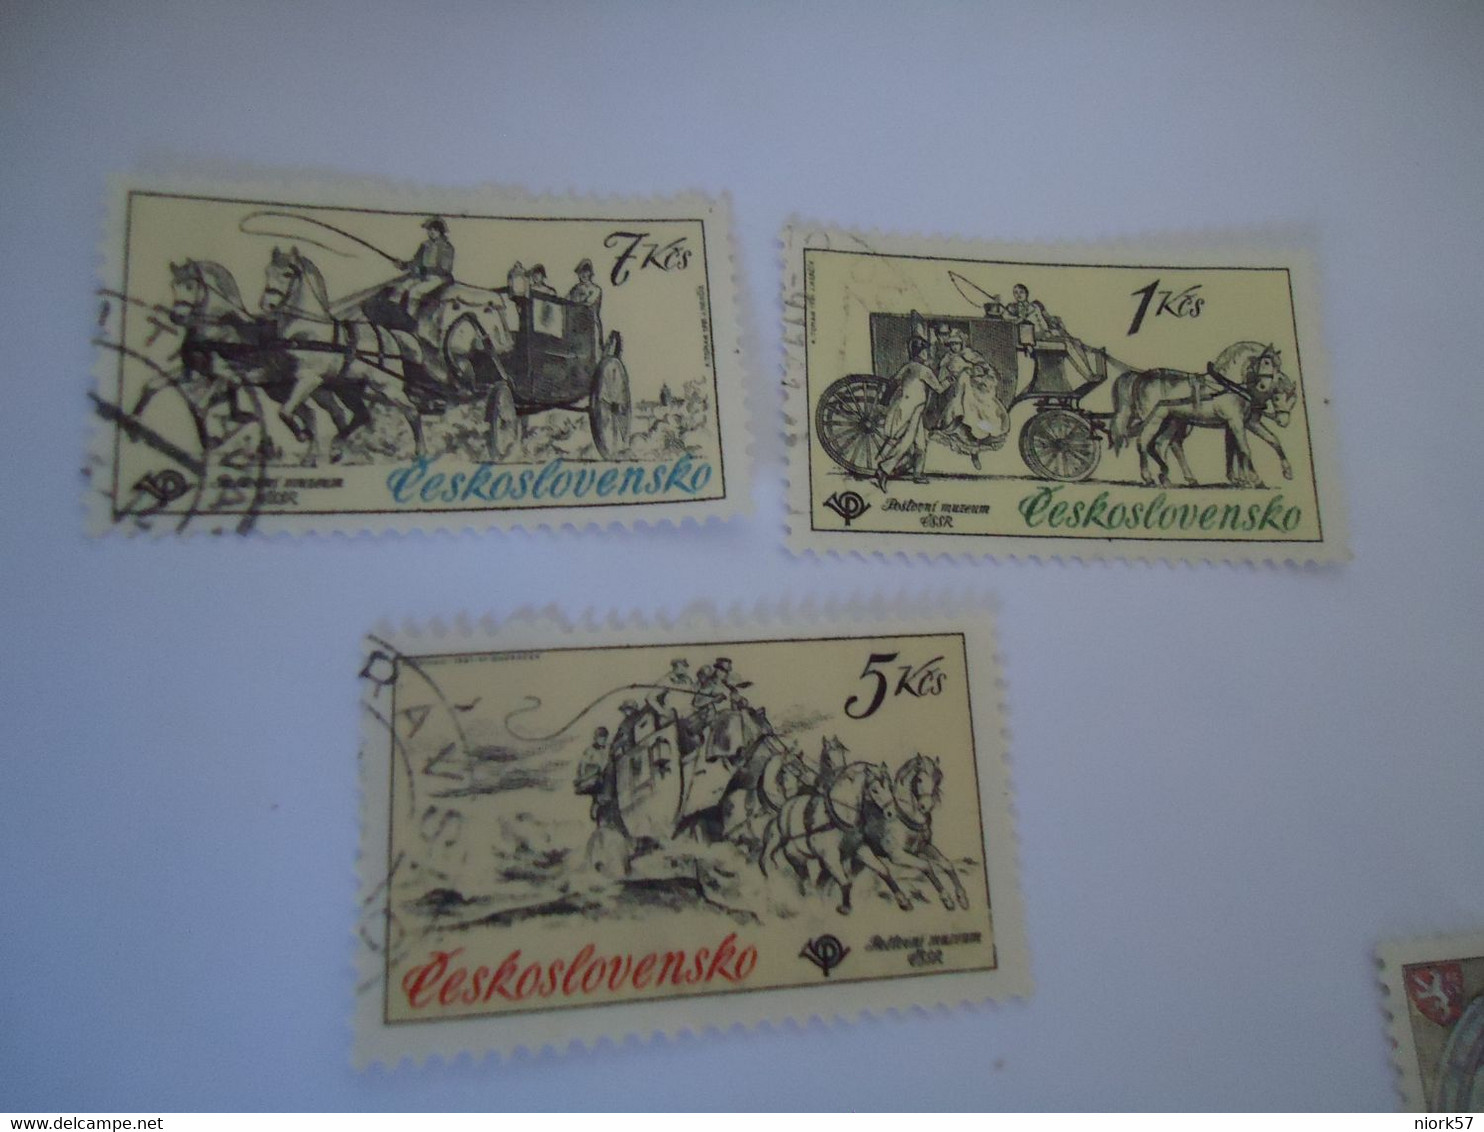 CZECHOSLOVAKIA USED STAMPS HORSES WITH COACH - ...-1918 Prefilatelia